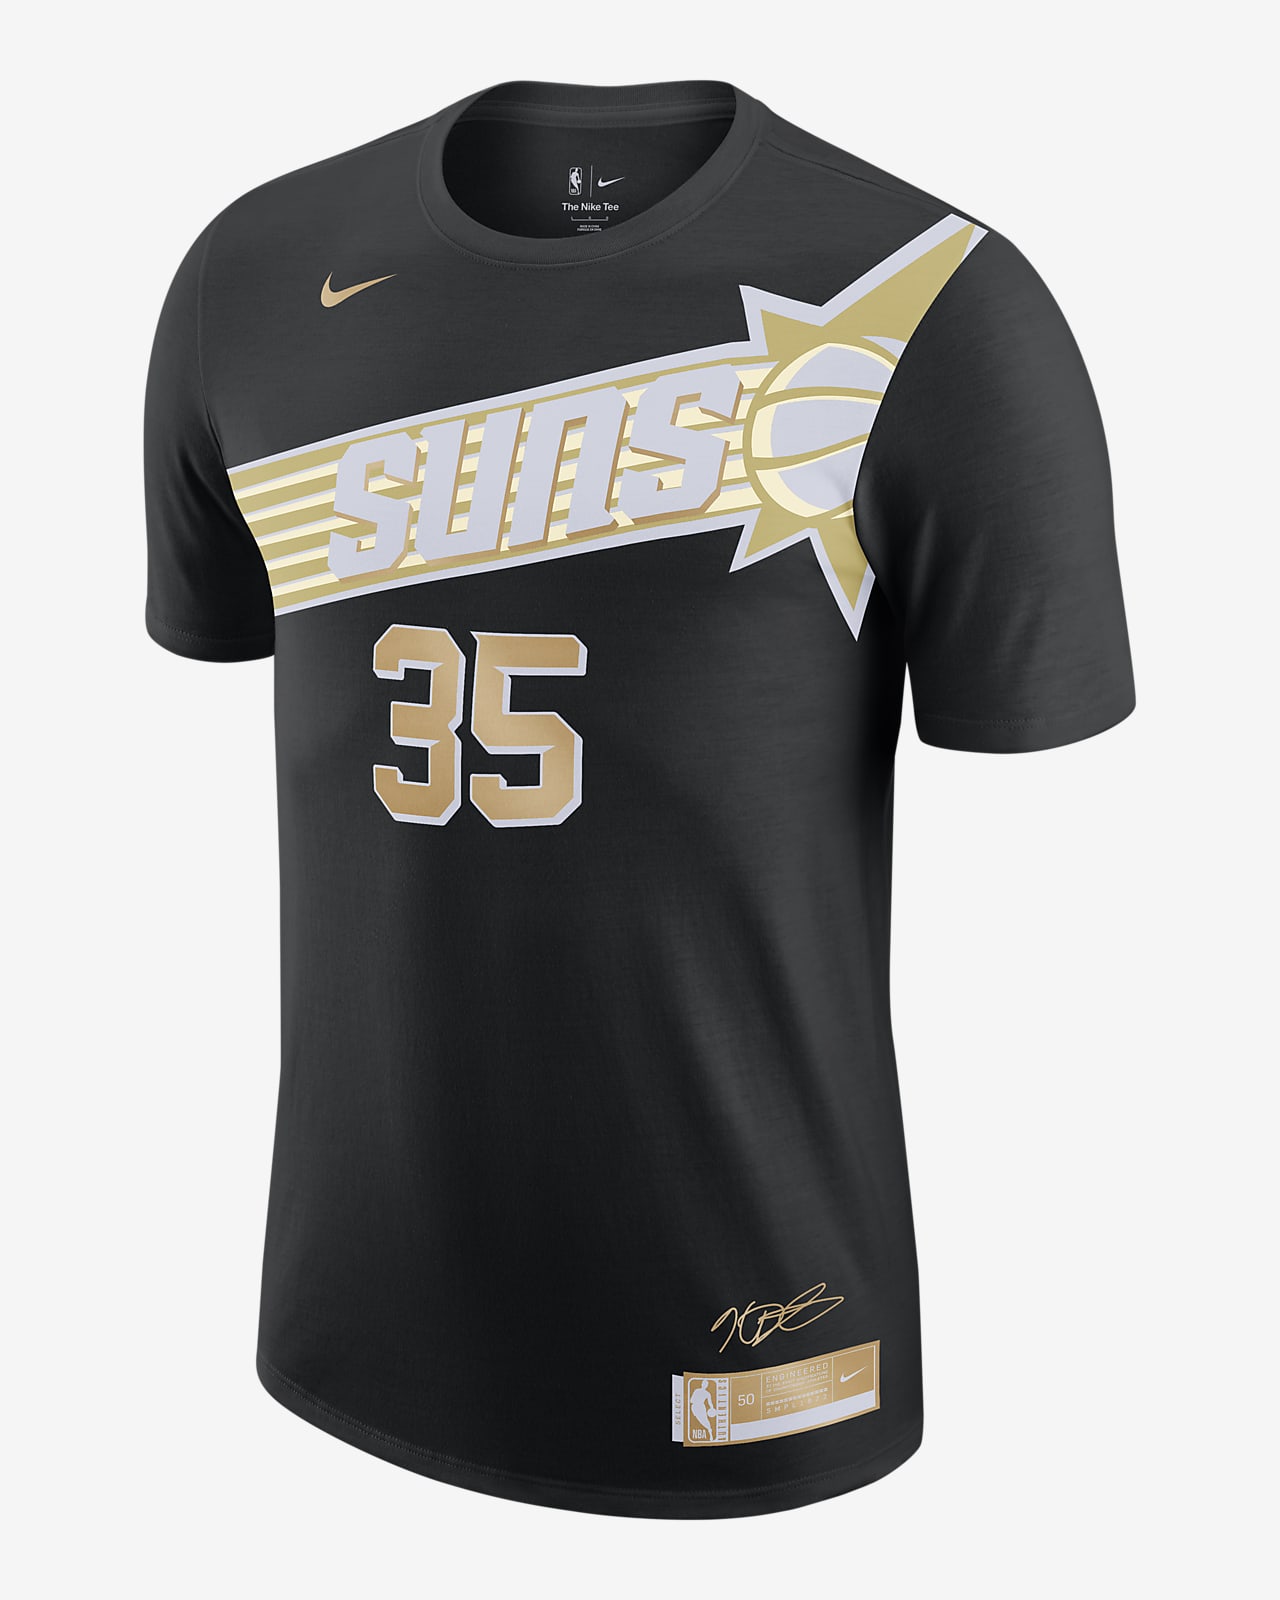 Kevin Durant Select Series Men's Nike NBA T-Shirt